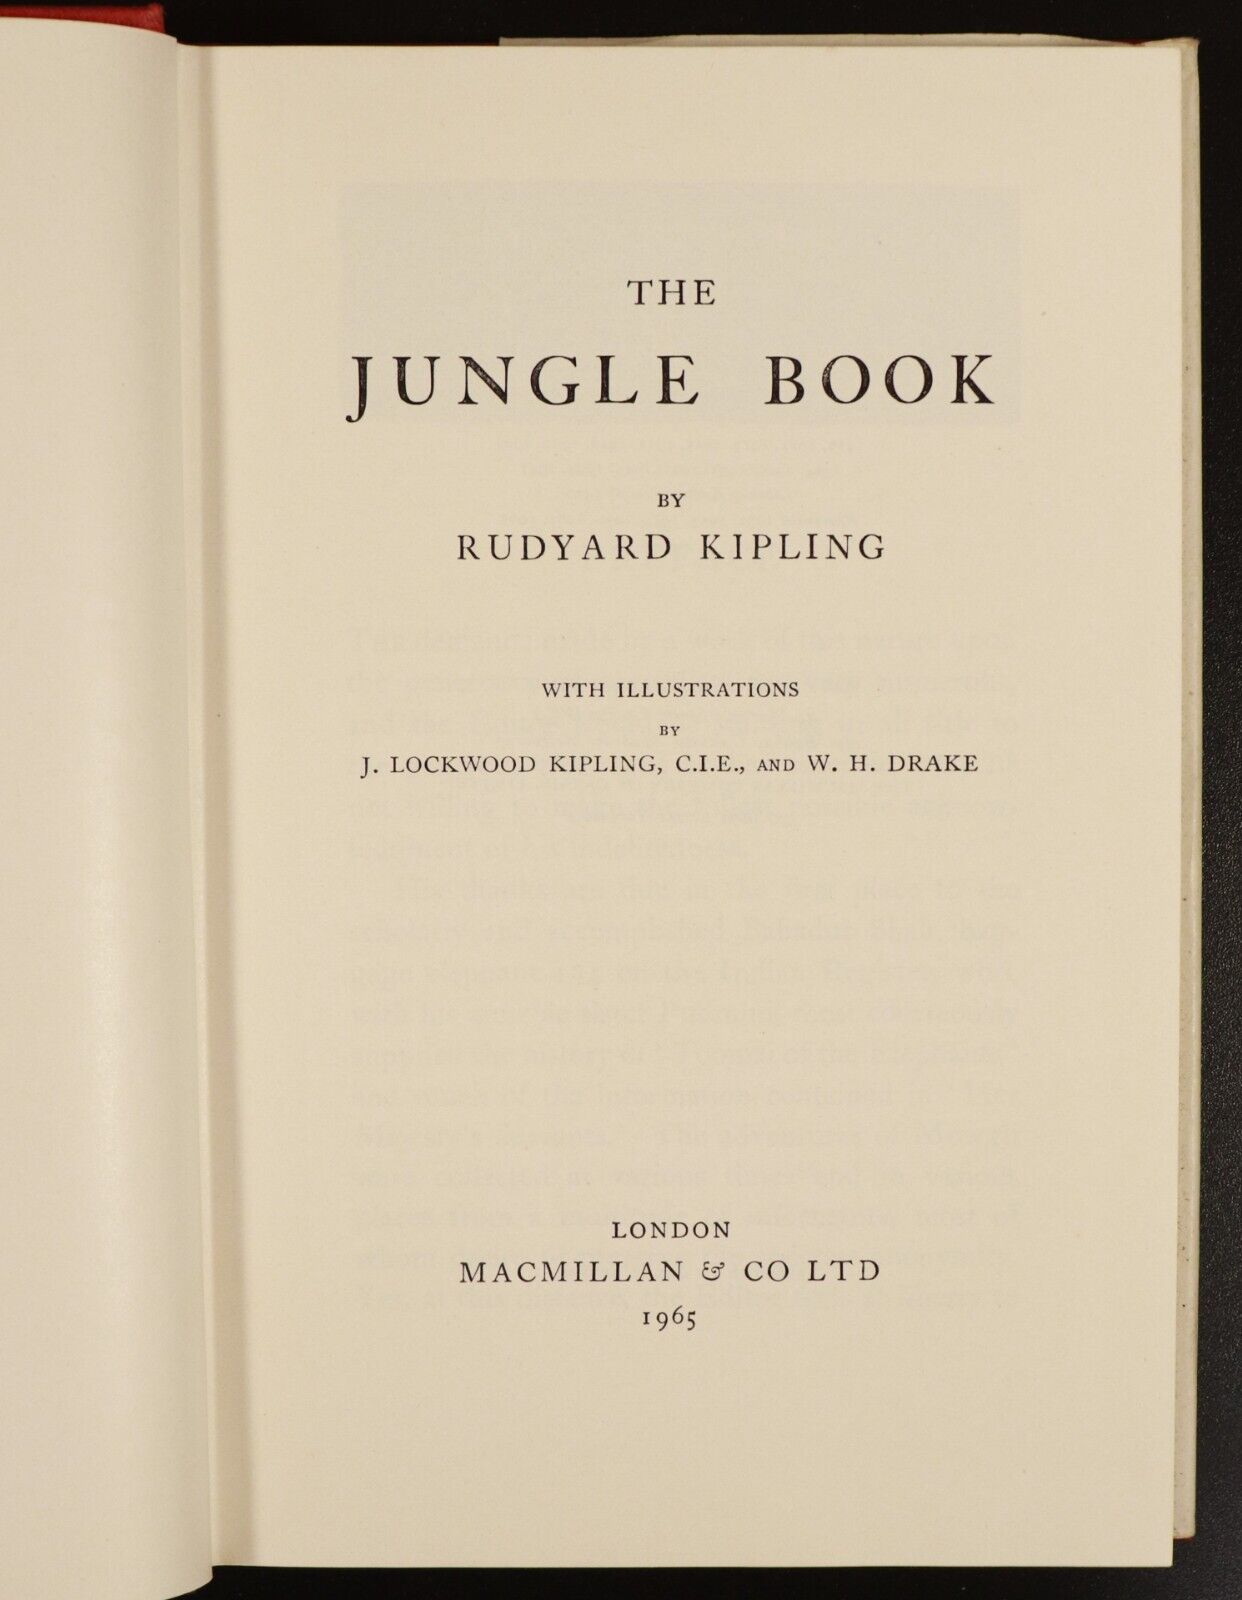 1965 2vol The Jungle Book & Second Jungle Book by Rudyard Kipling Fiction Books - 0